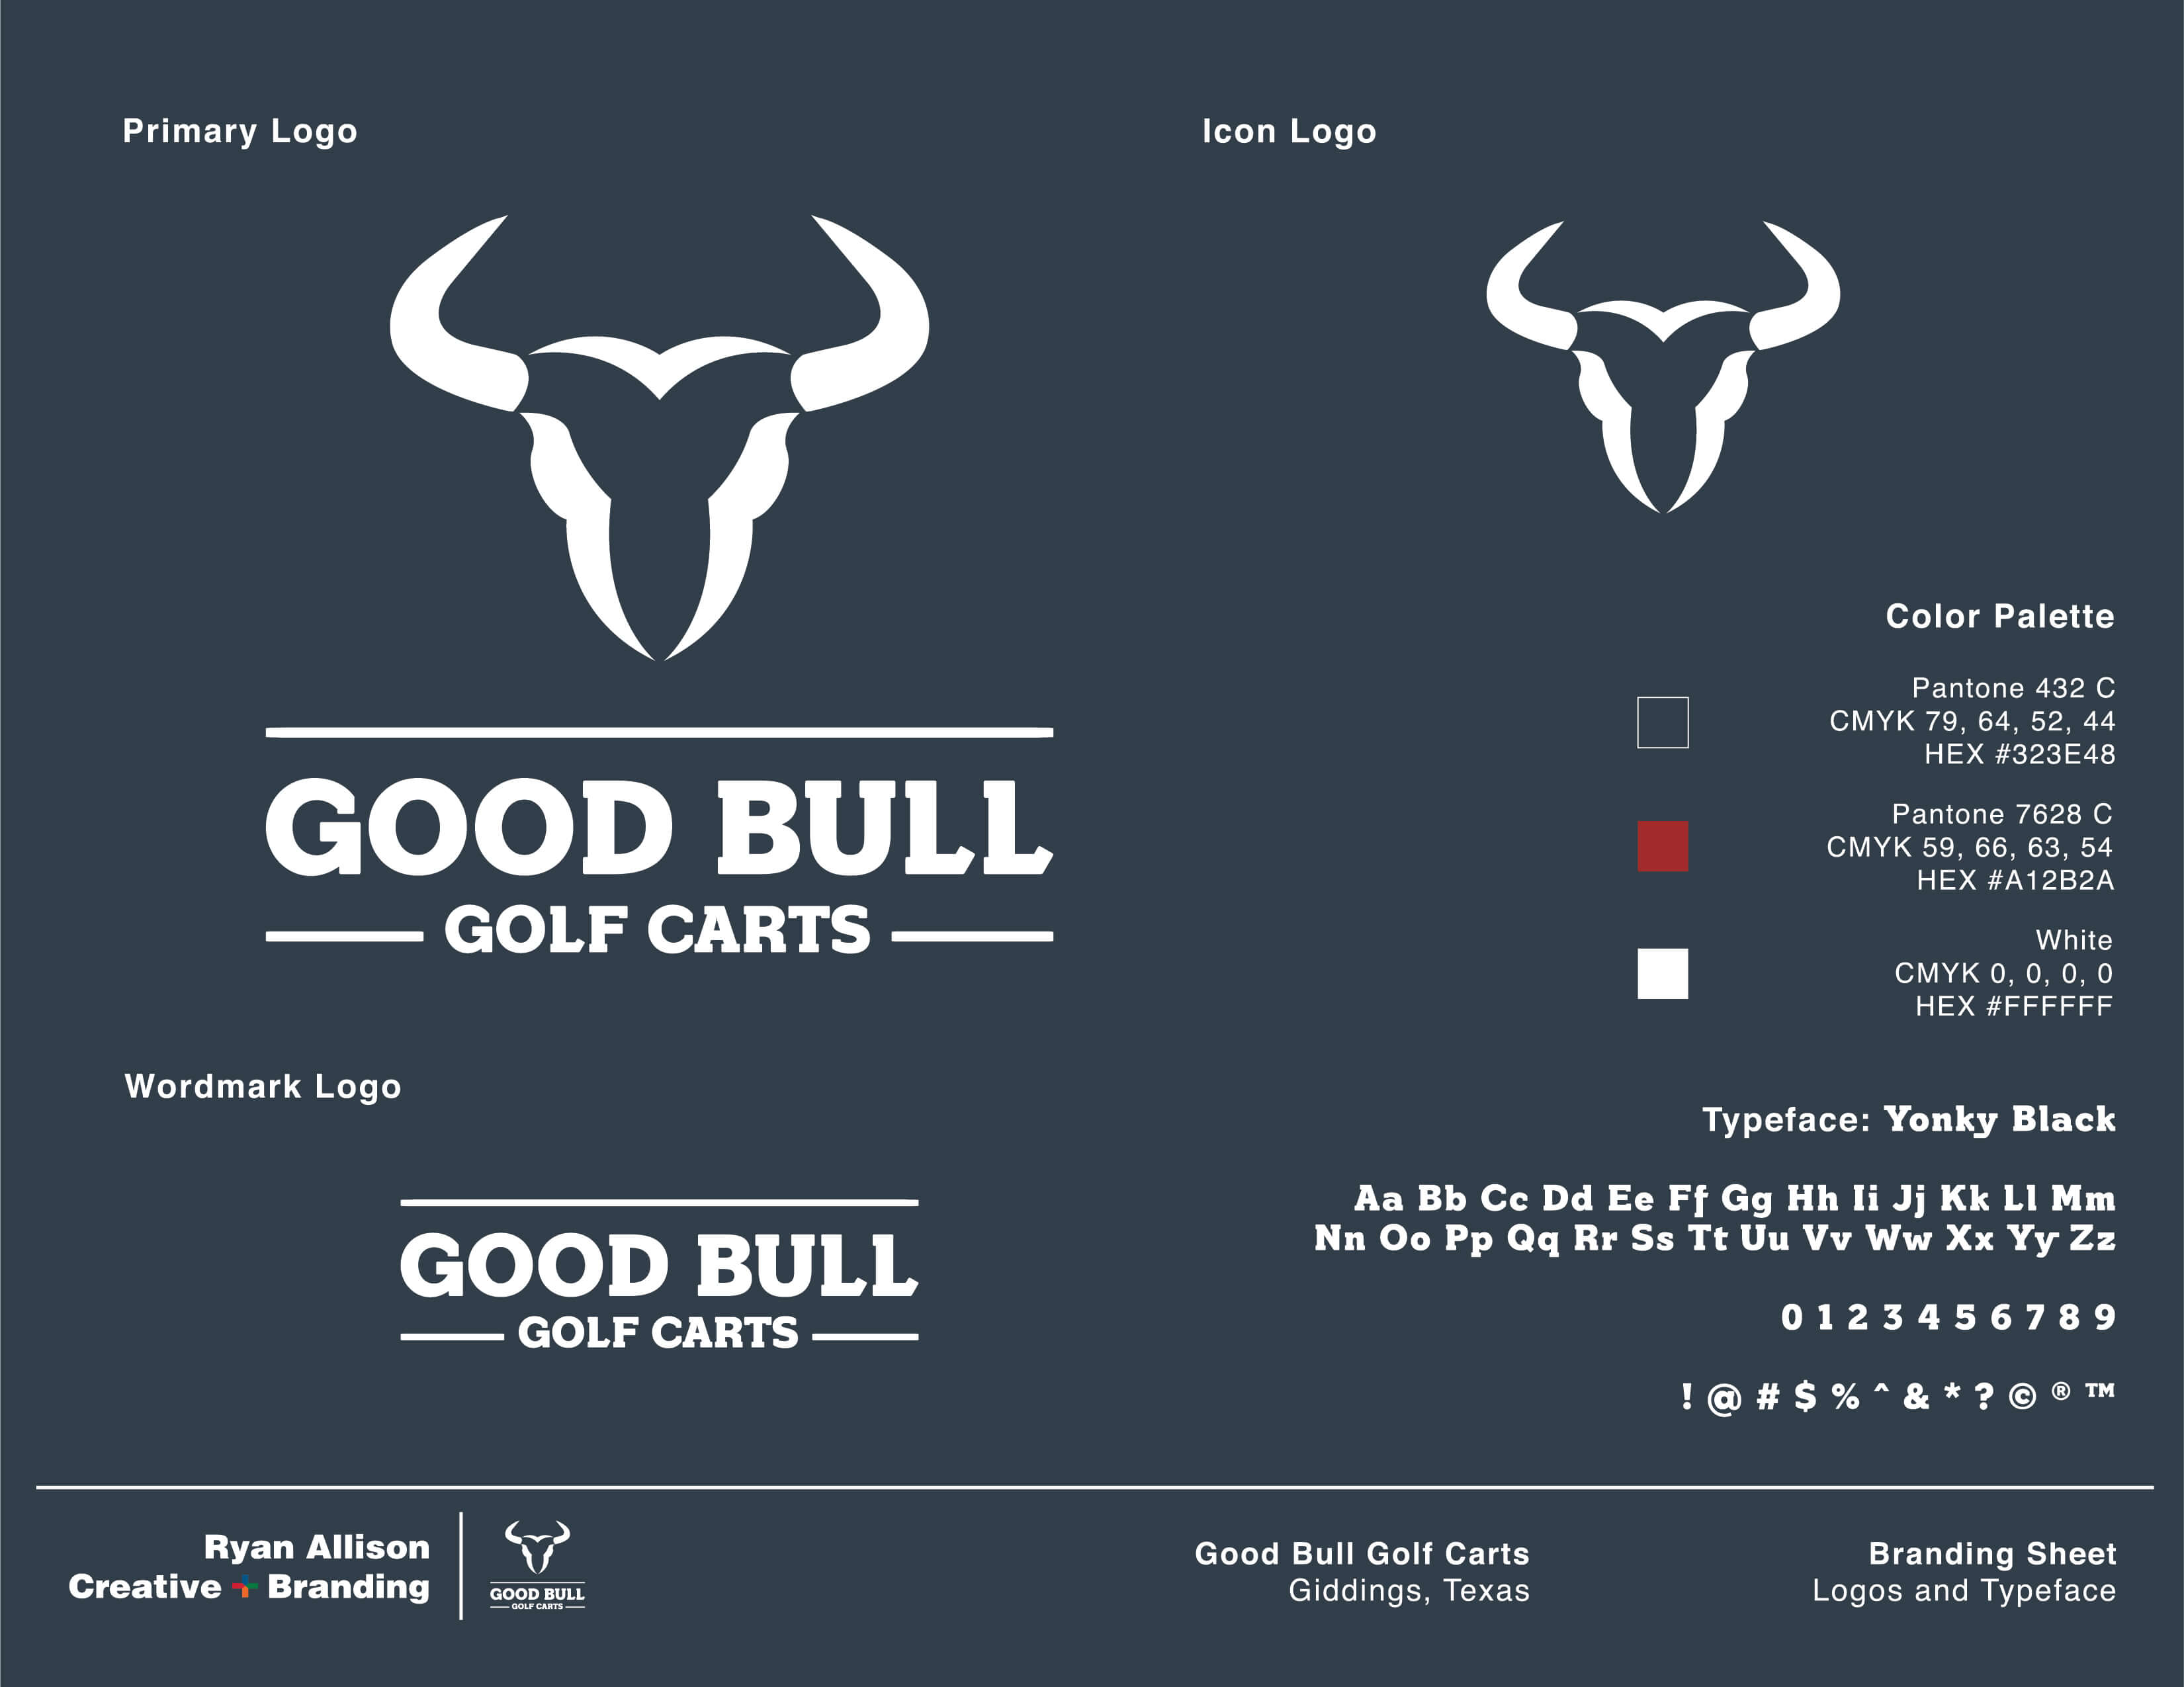 Good Bull Golf Carts - Branding Sheet Page 3 - Ryan Allison Creative + Branding